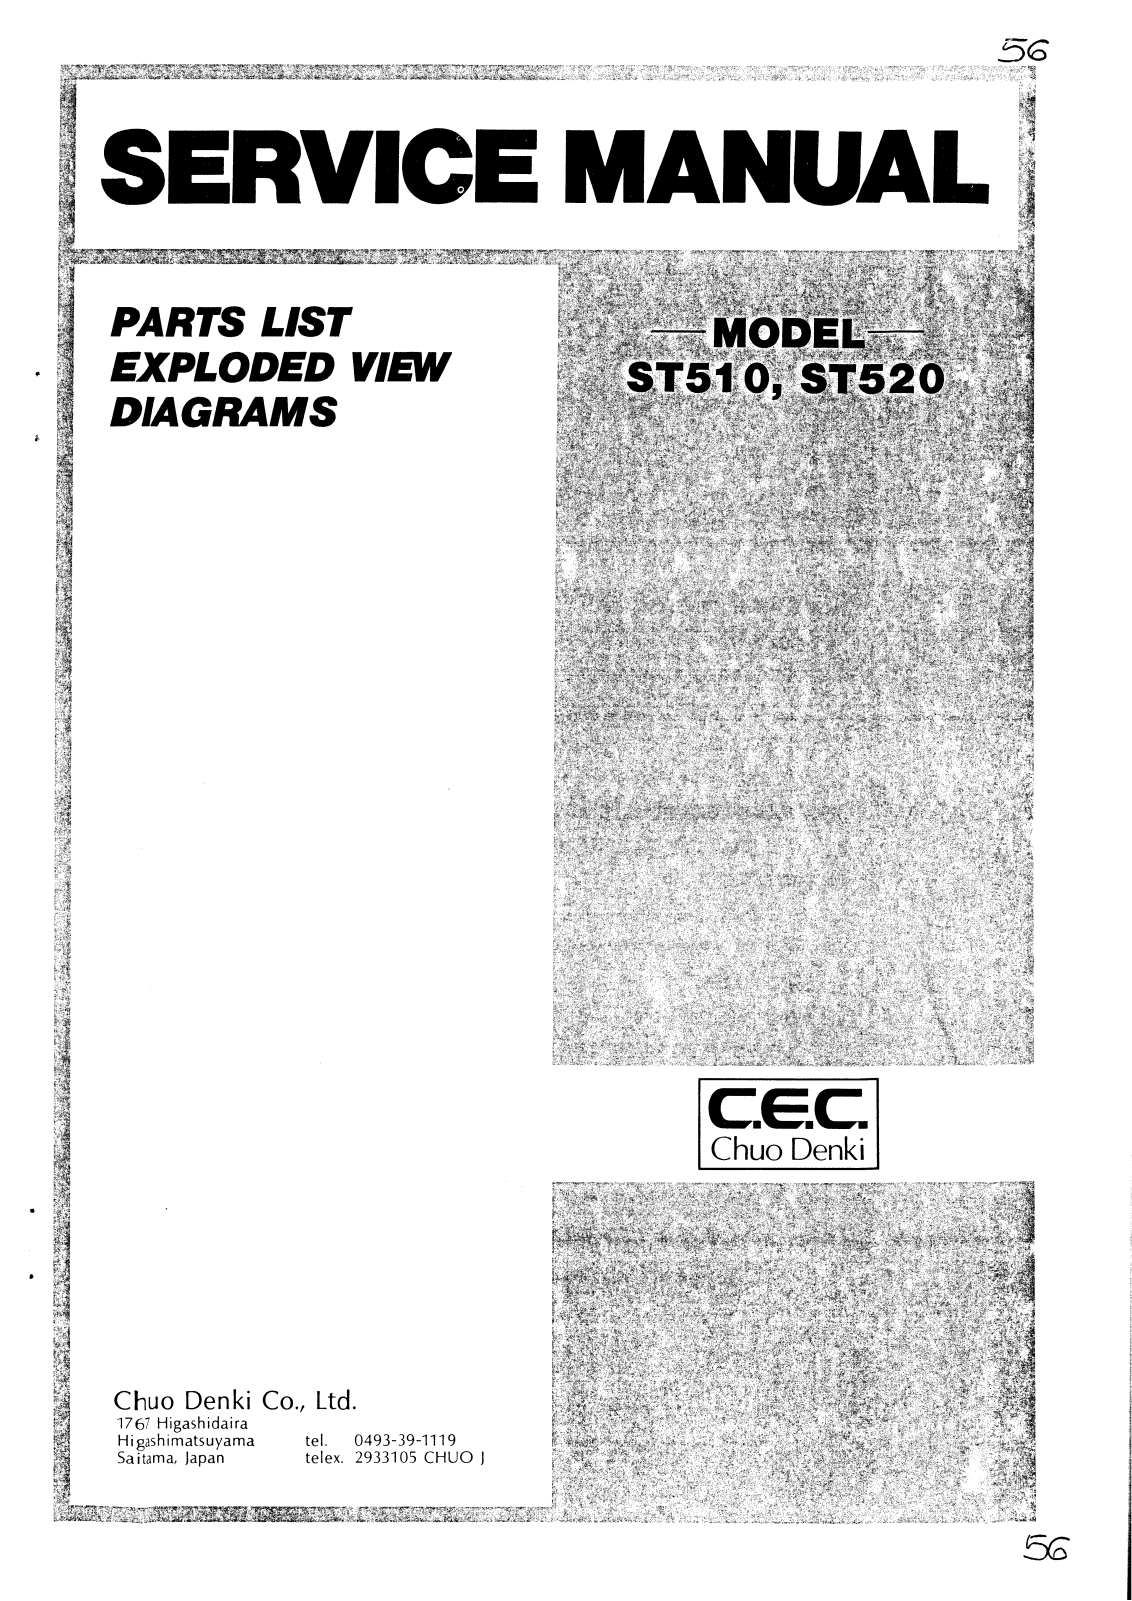 C.E.C. ST-510, ST-520 Service manual